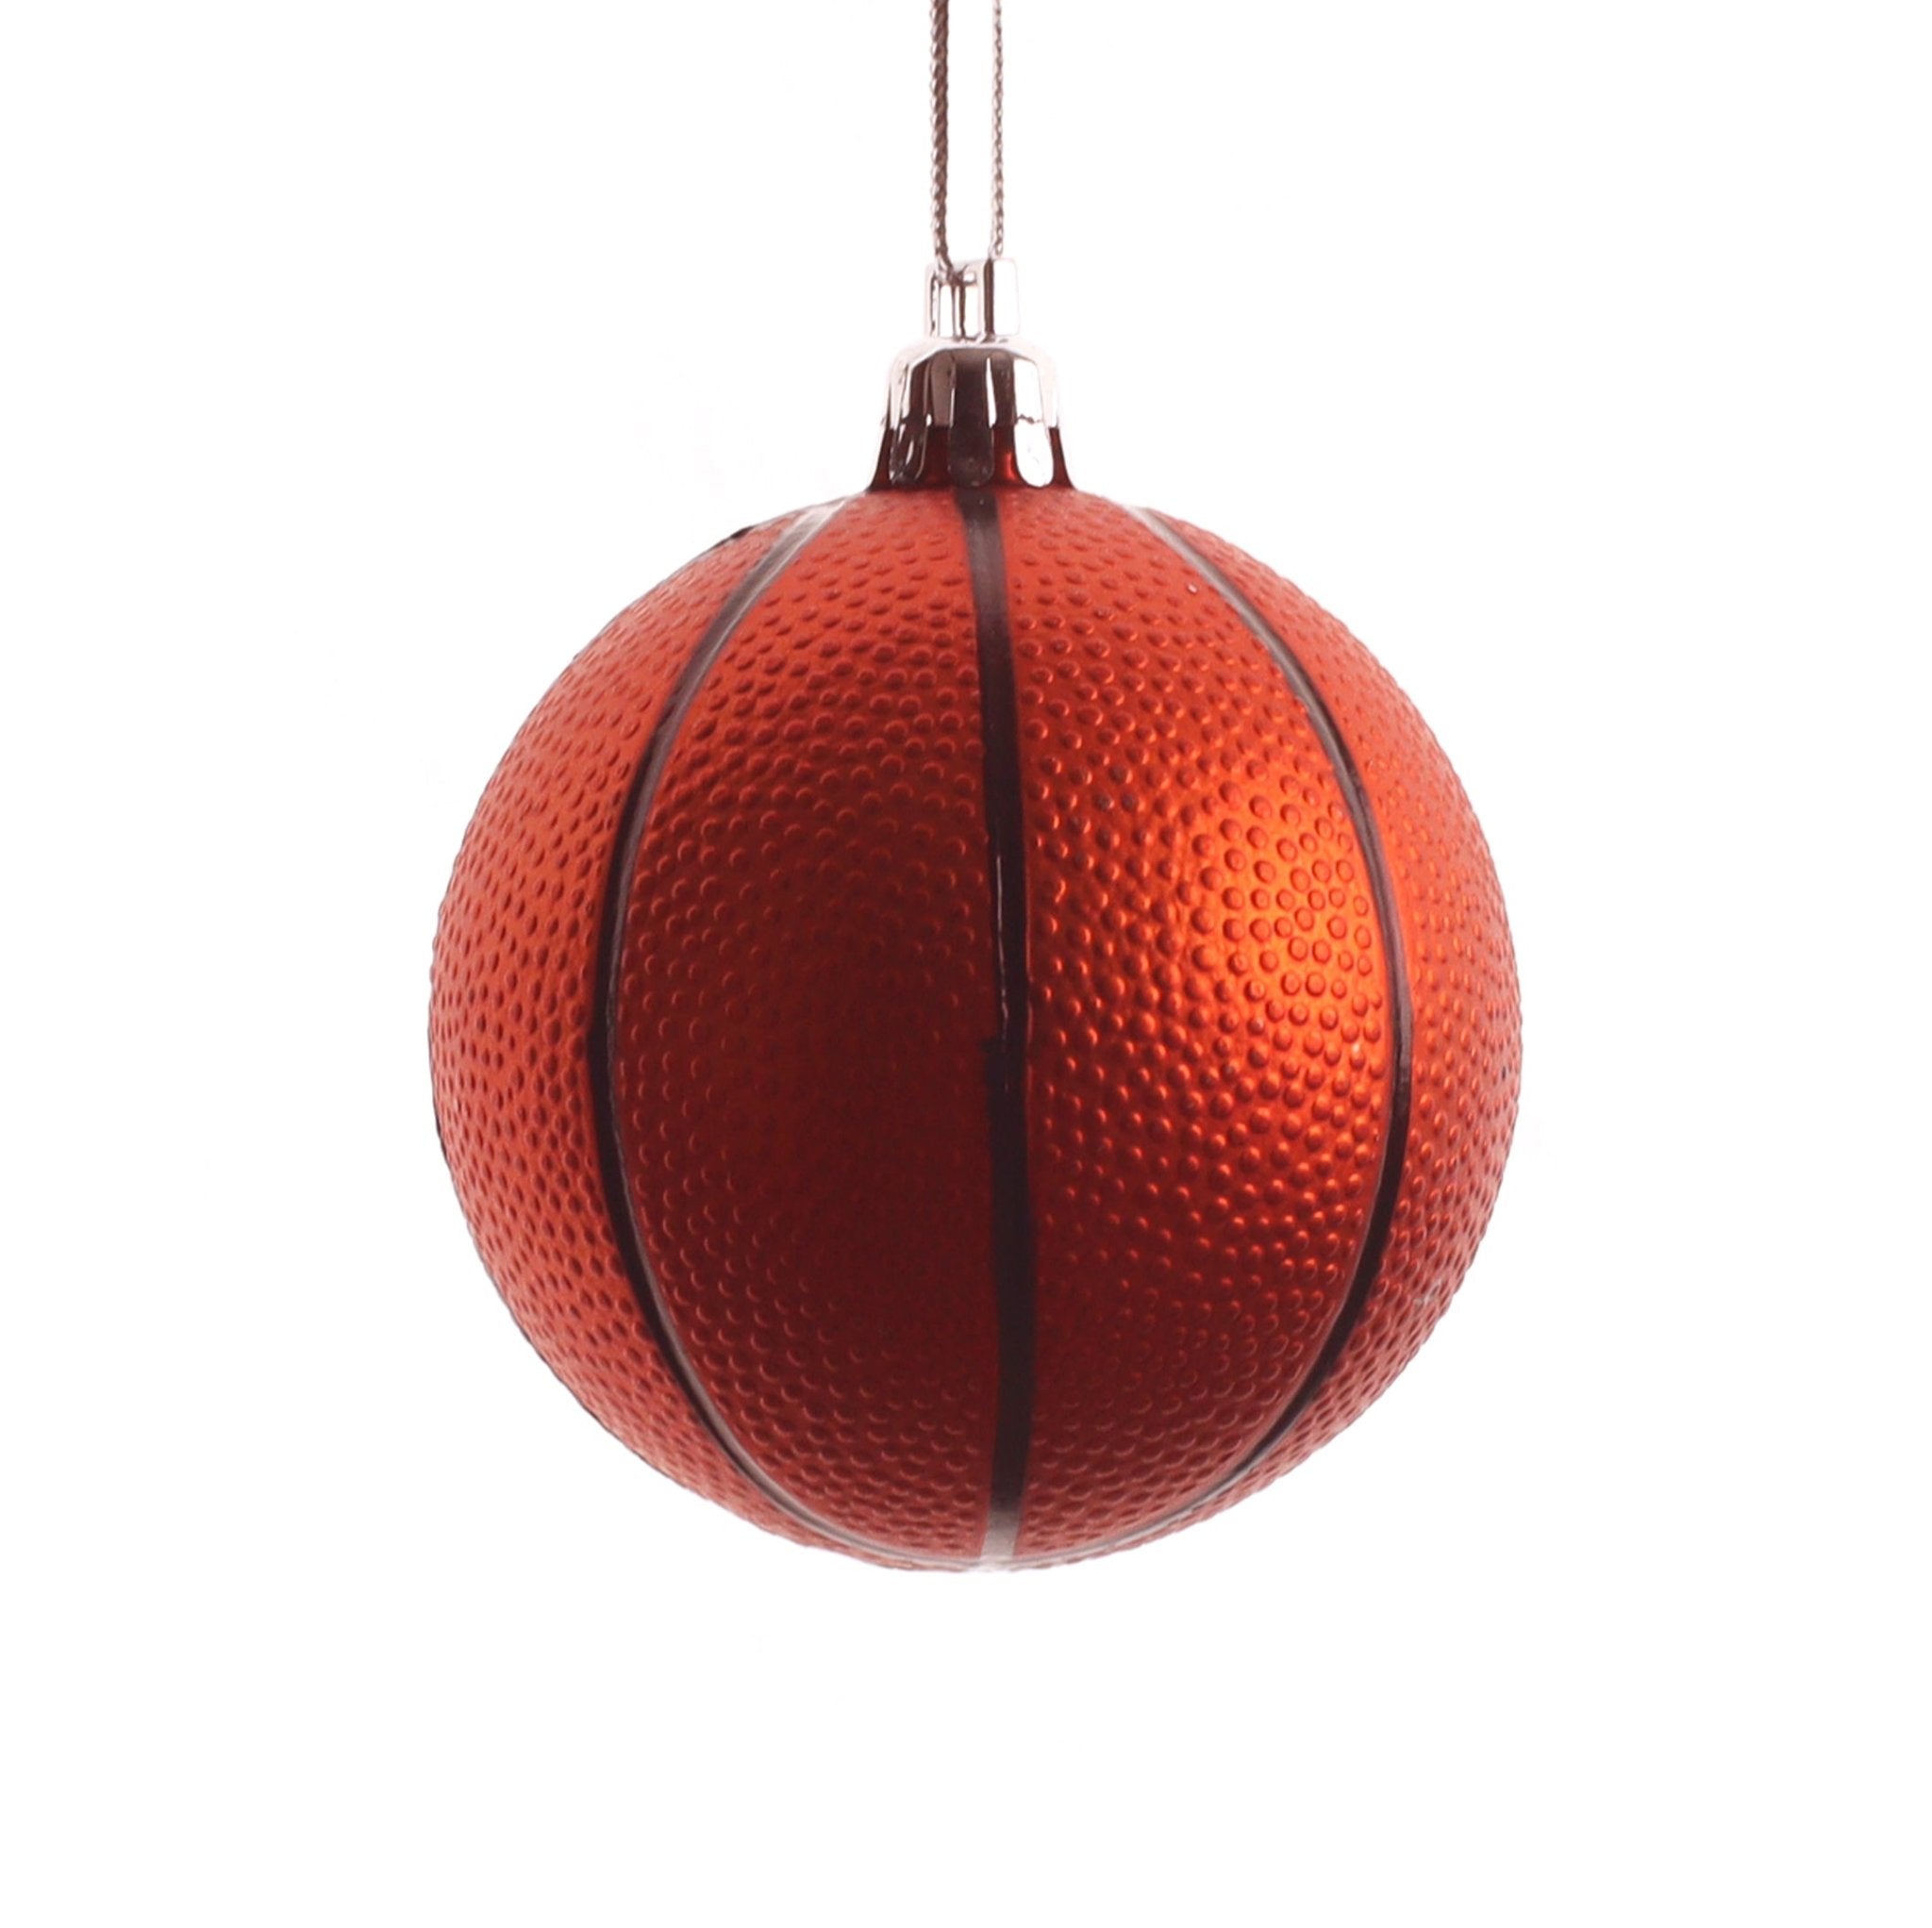 8am Basketball Shatterproof Ornament - MODA FLORA Santa's Workshop